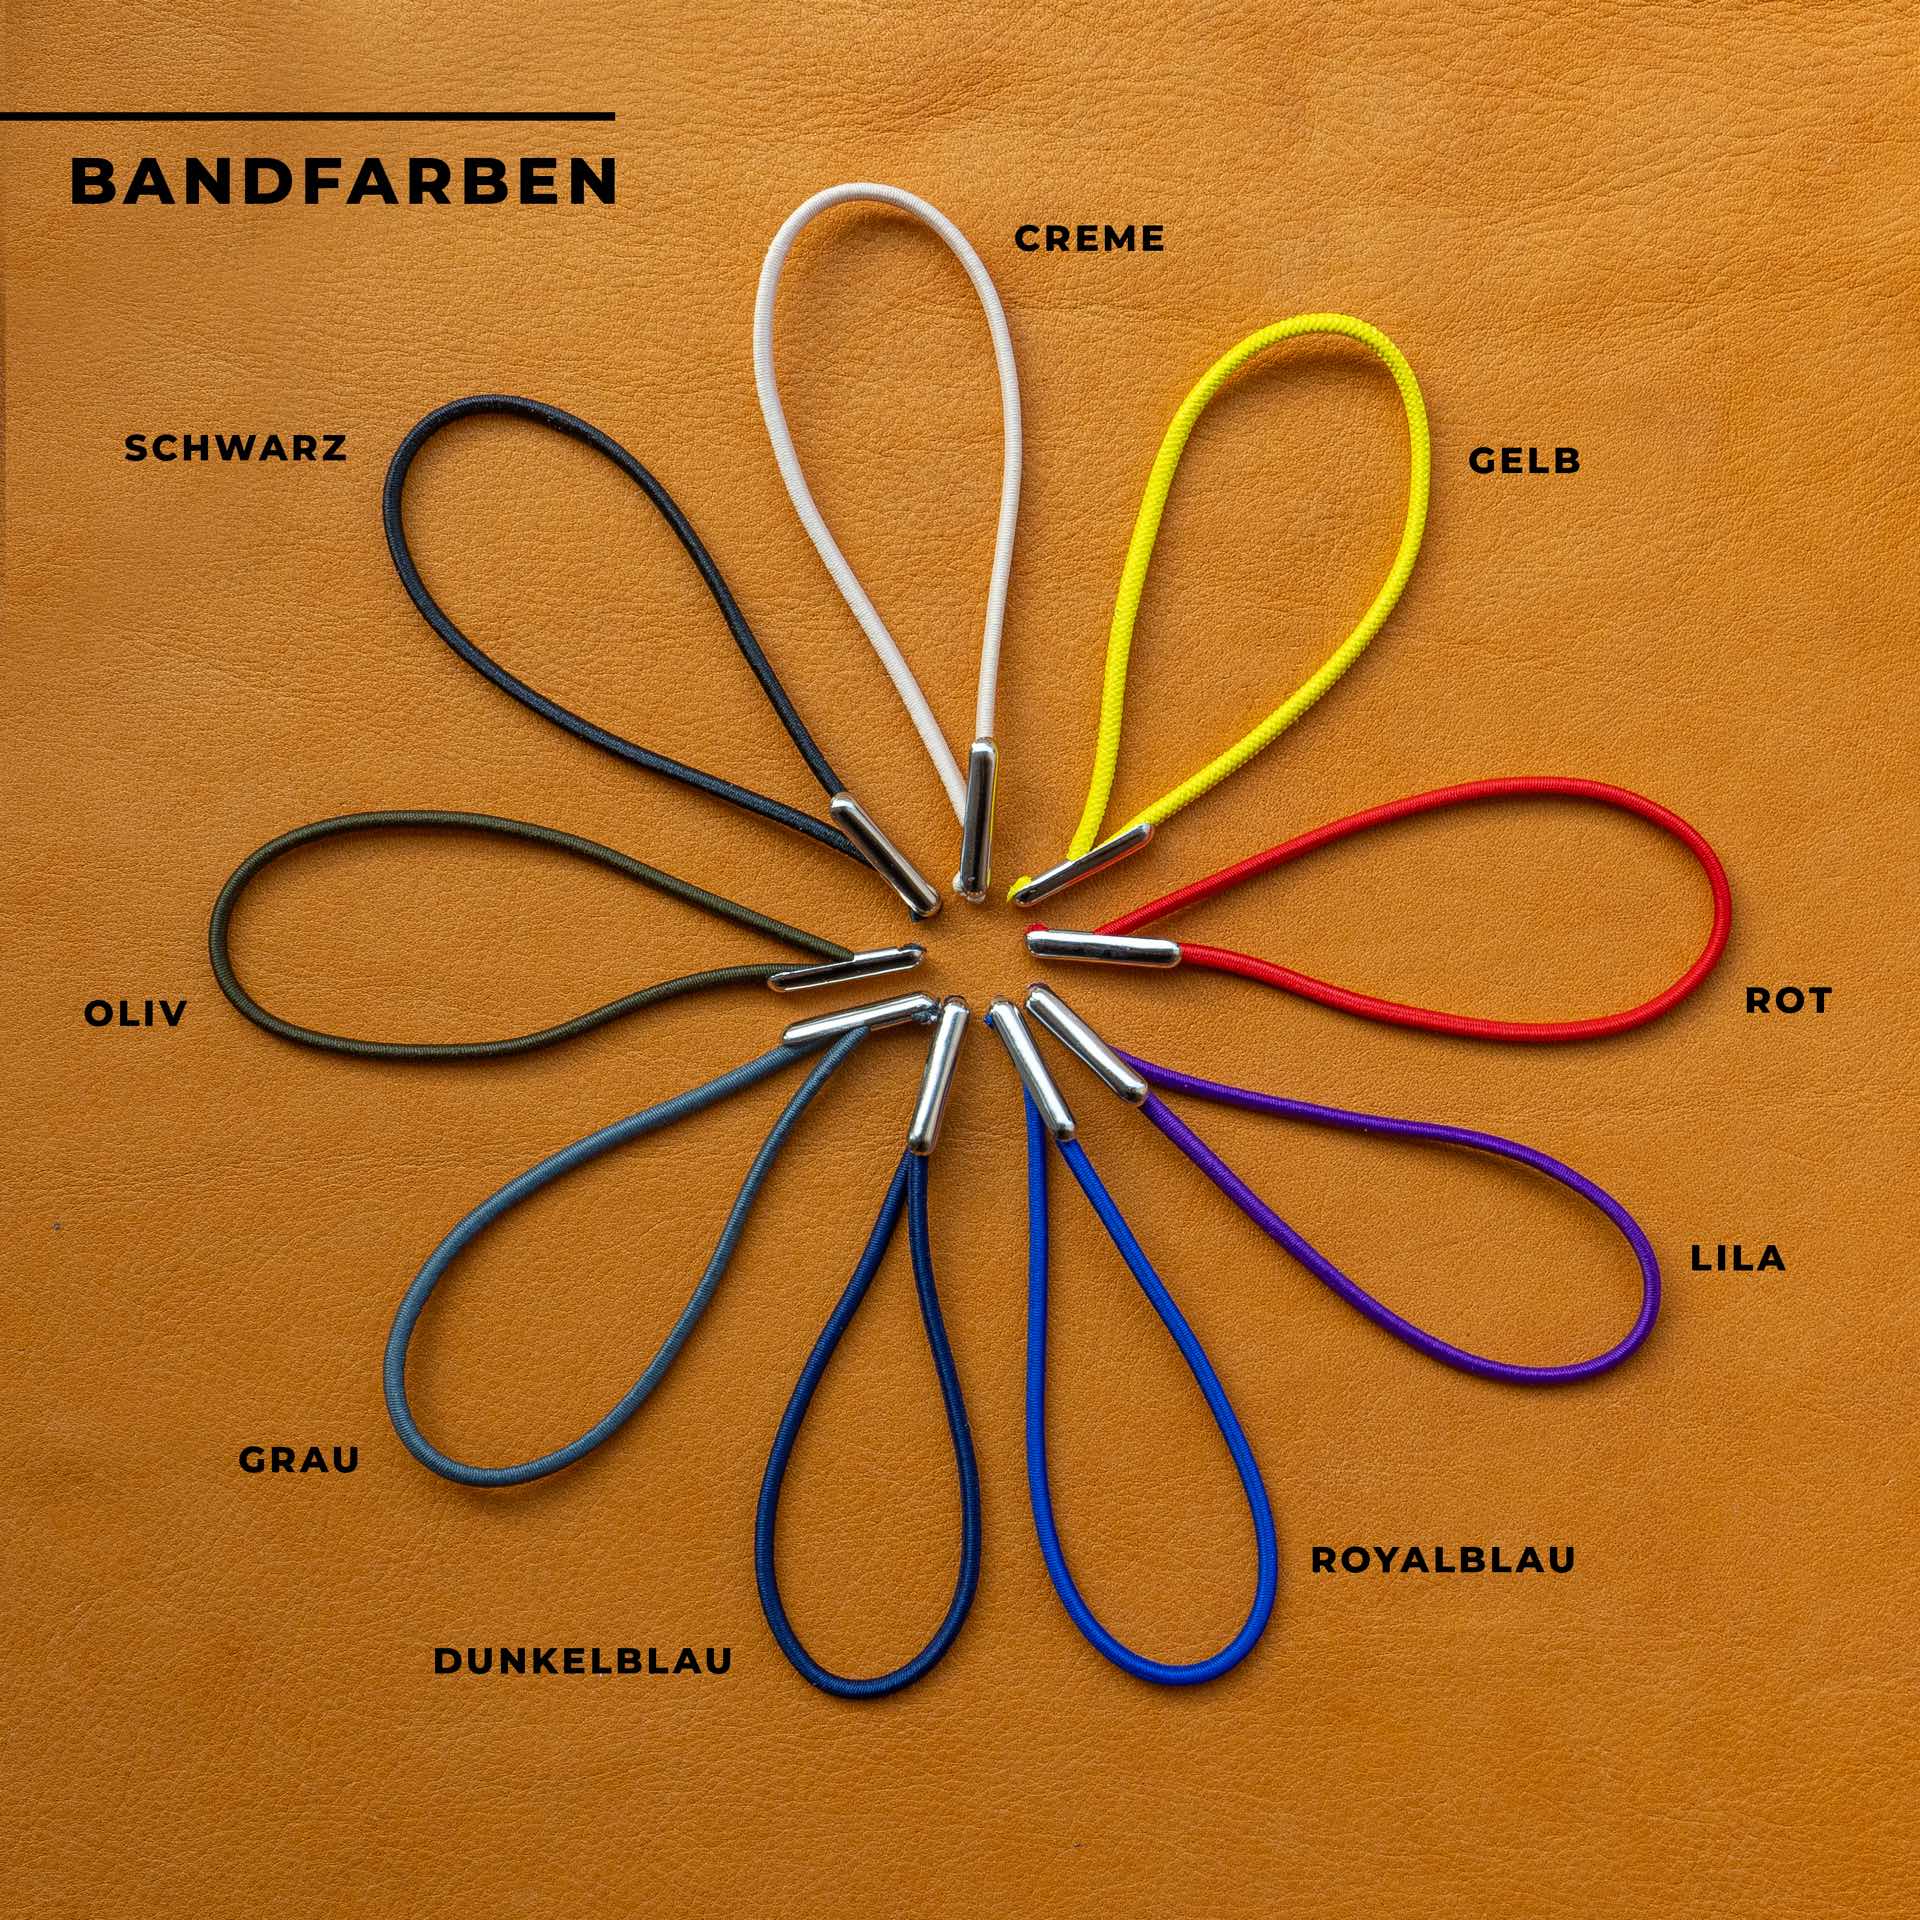 Bandfarben-Franziska-Klee-cognac-bandfarben